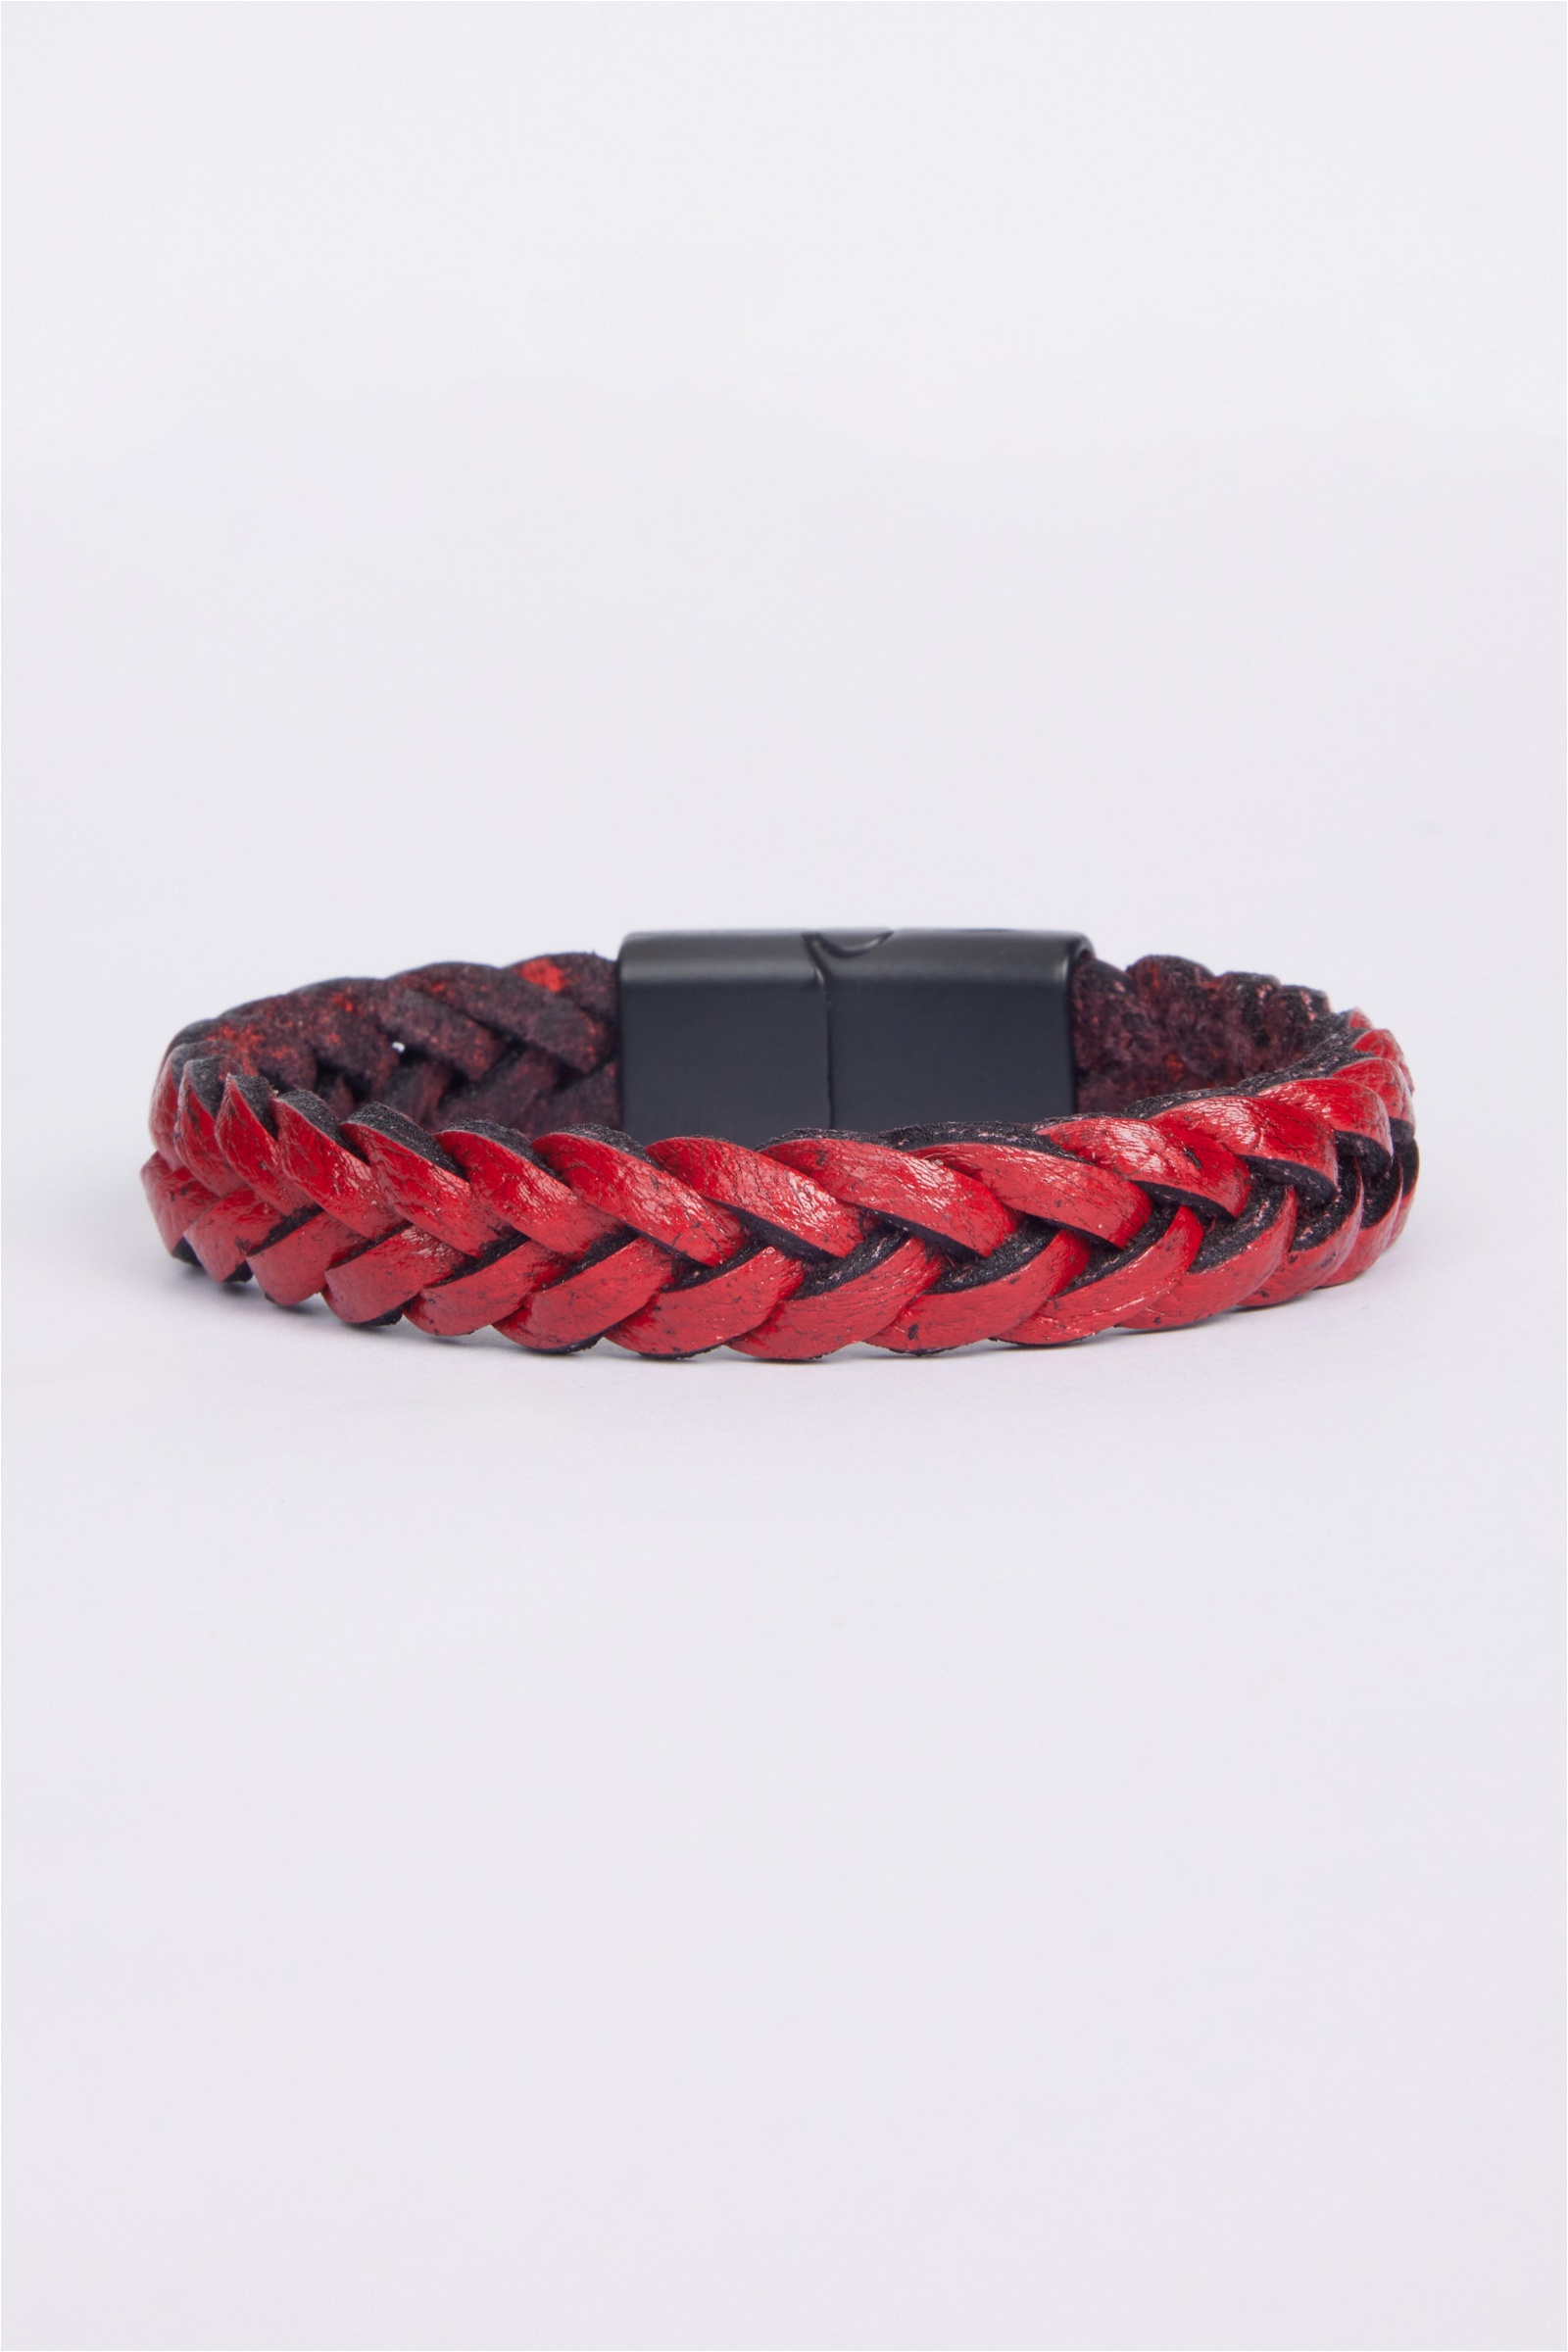 Leather Red Bracelet